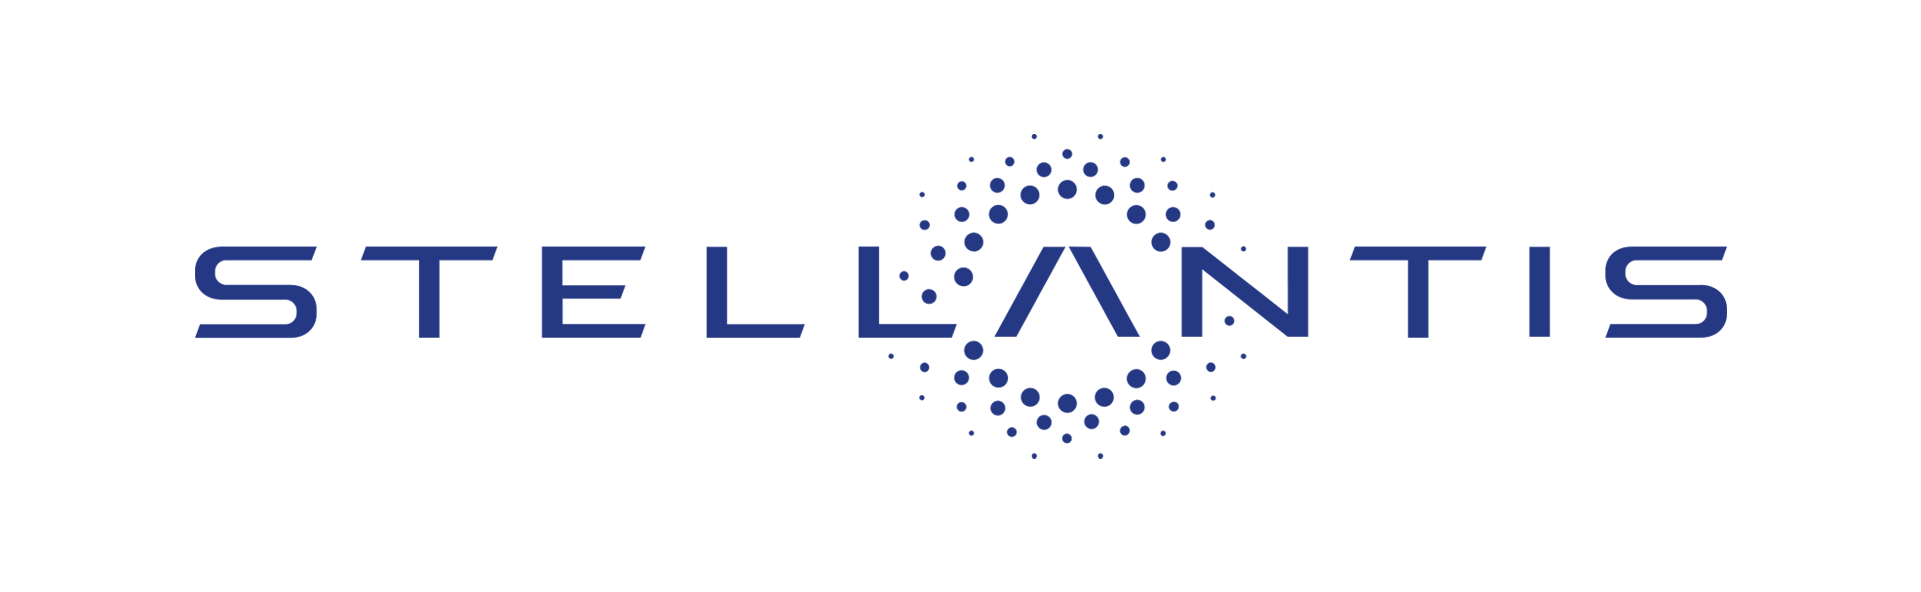 Stellantis-logo-transparent